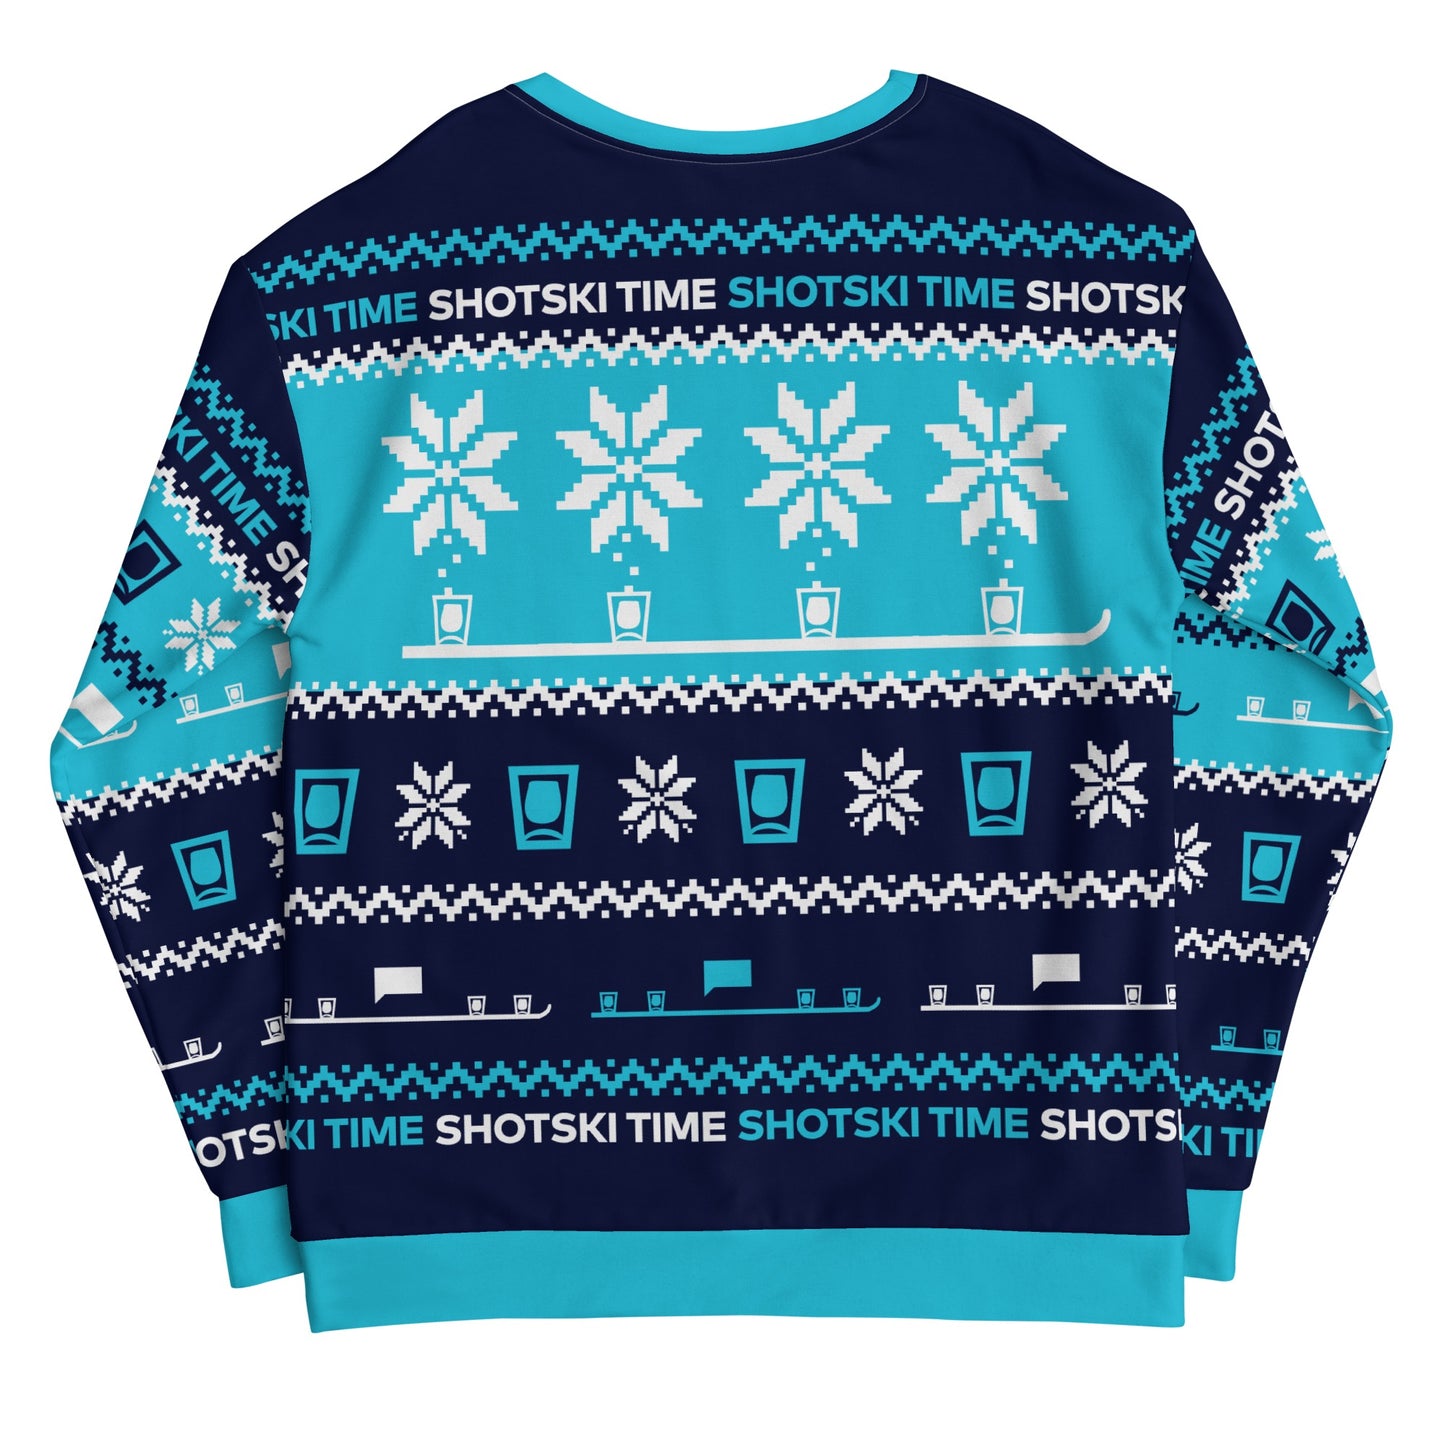 Watch What Happens Live Mazel Shotski Time Holiday Sweatshirt